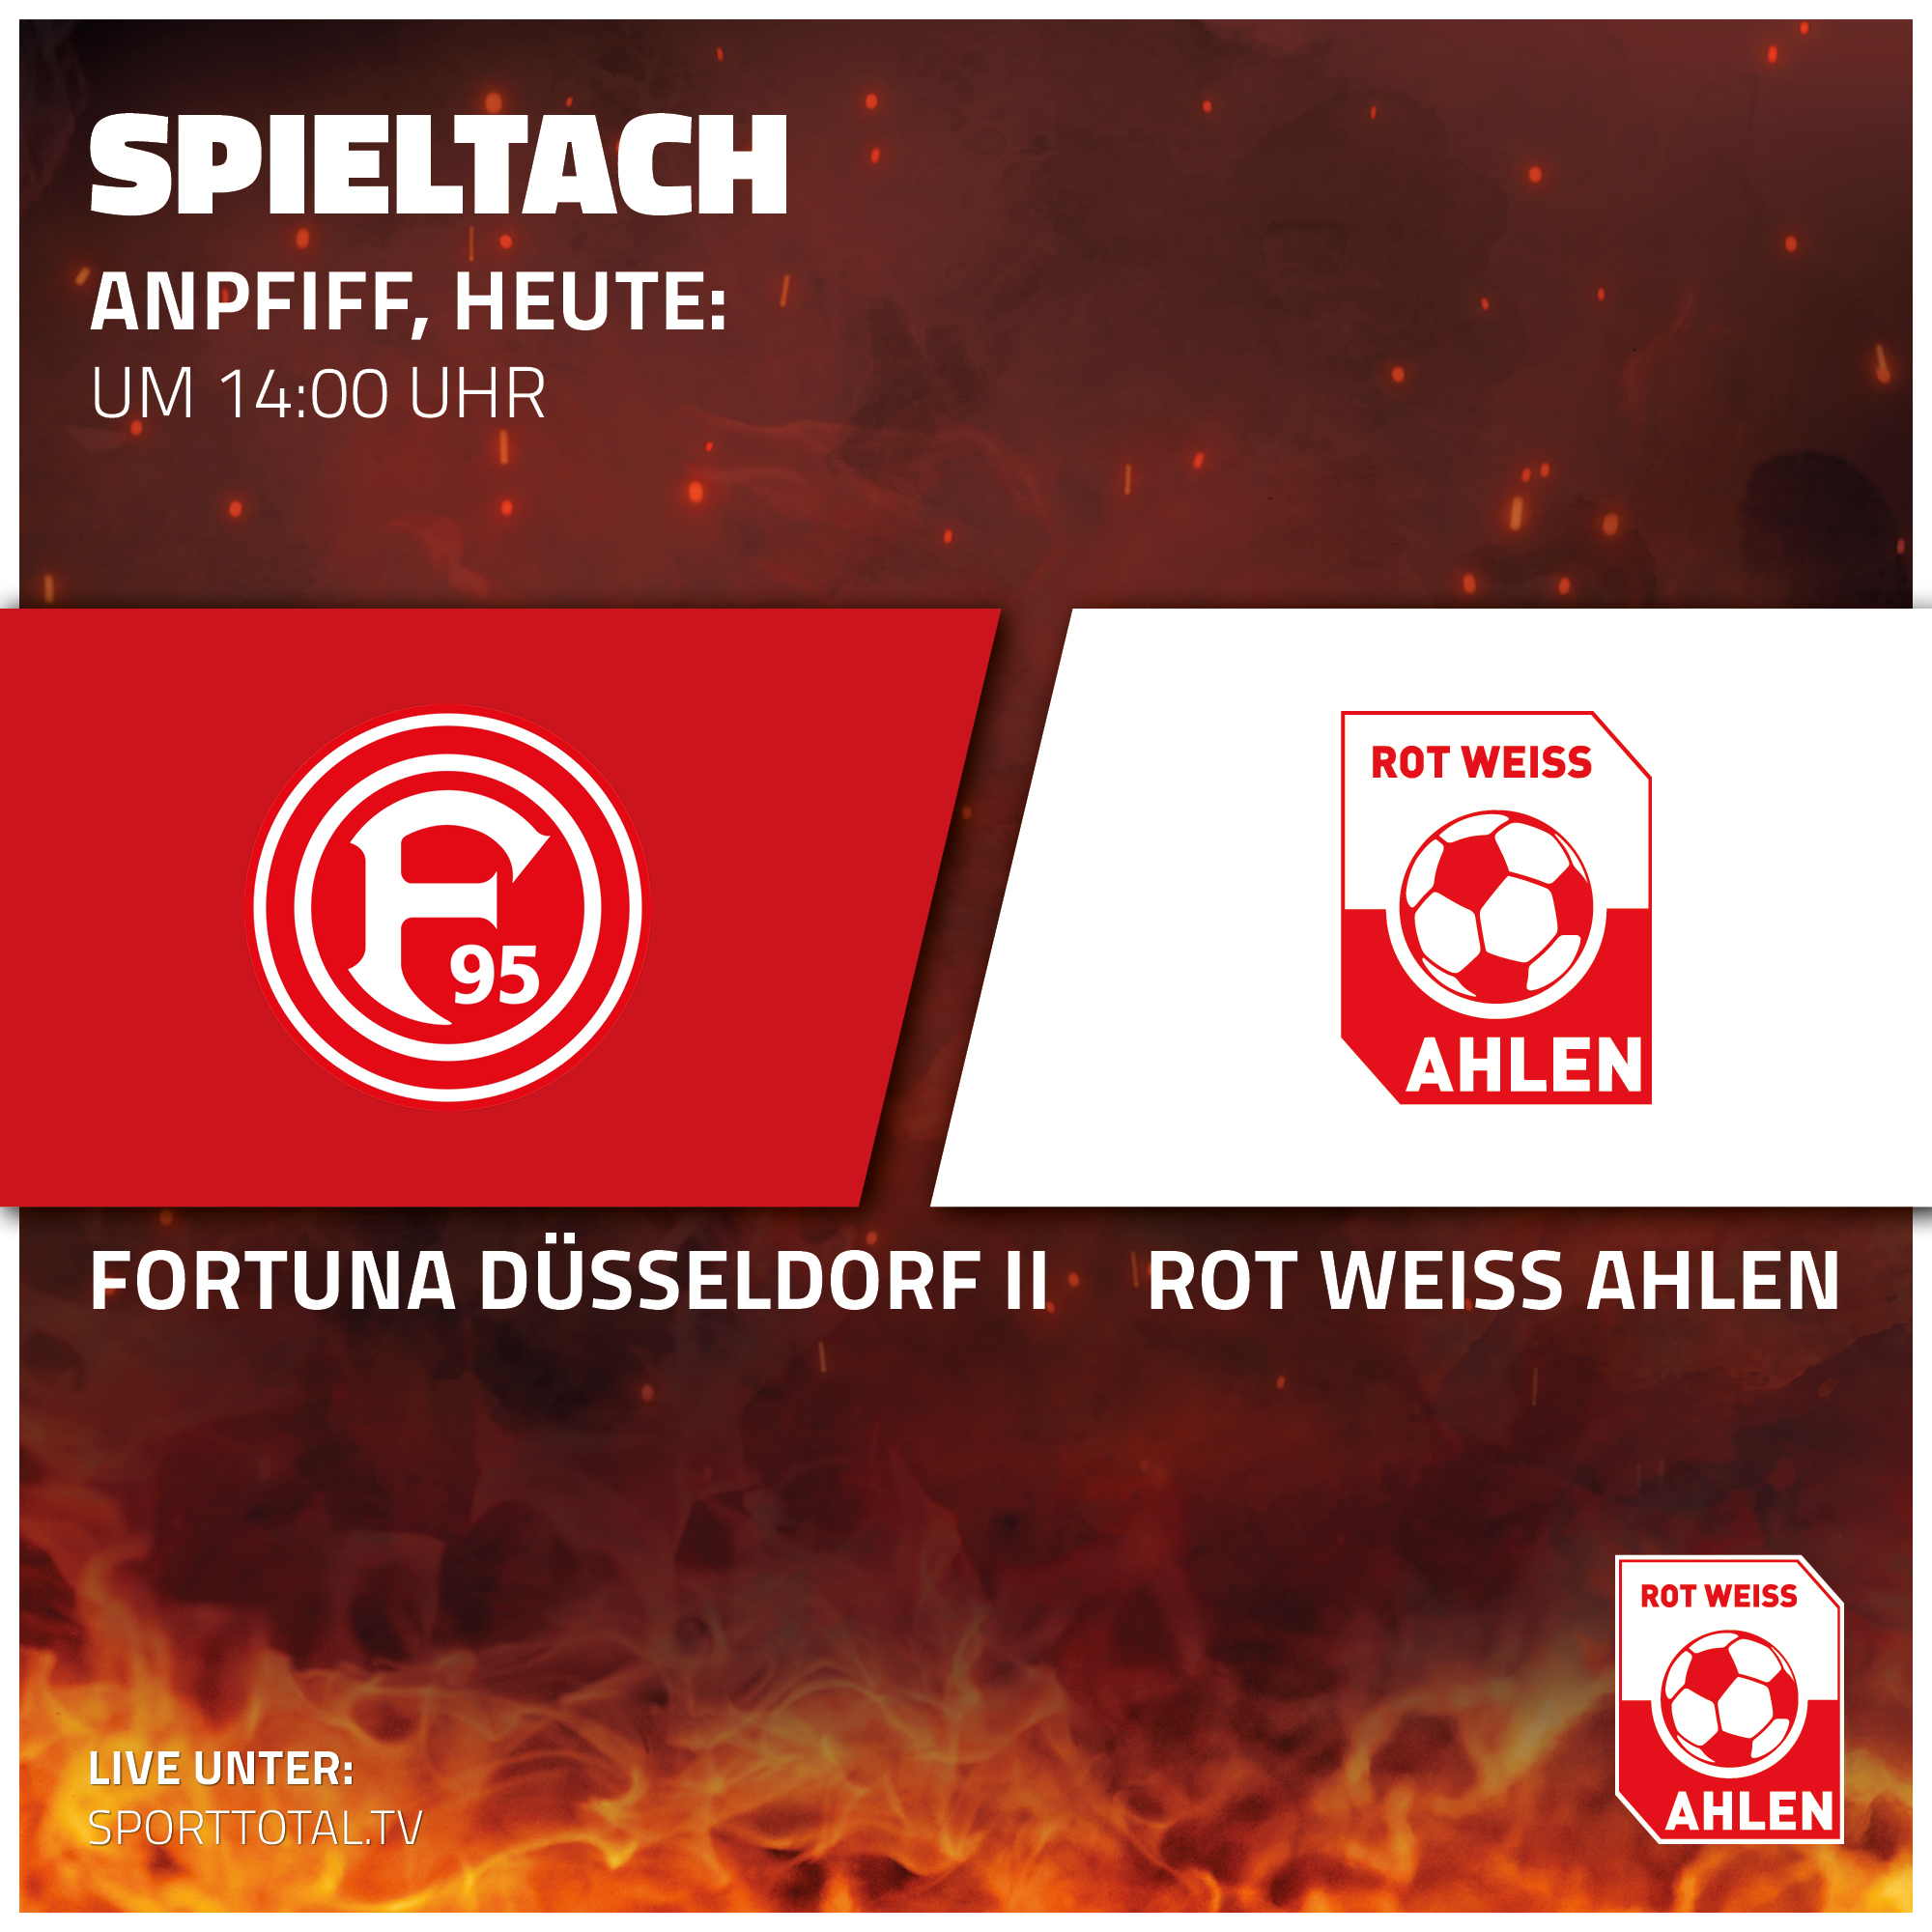 Spieltach Fortuna Düsseldorf II gegen Rot Weiss Ahlen